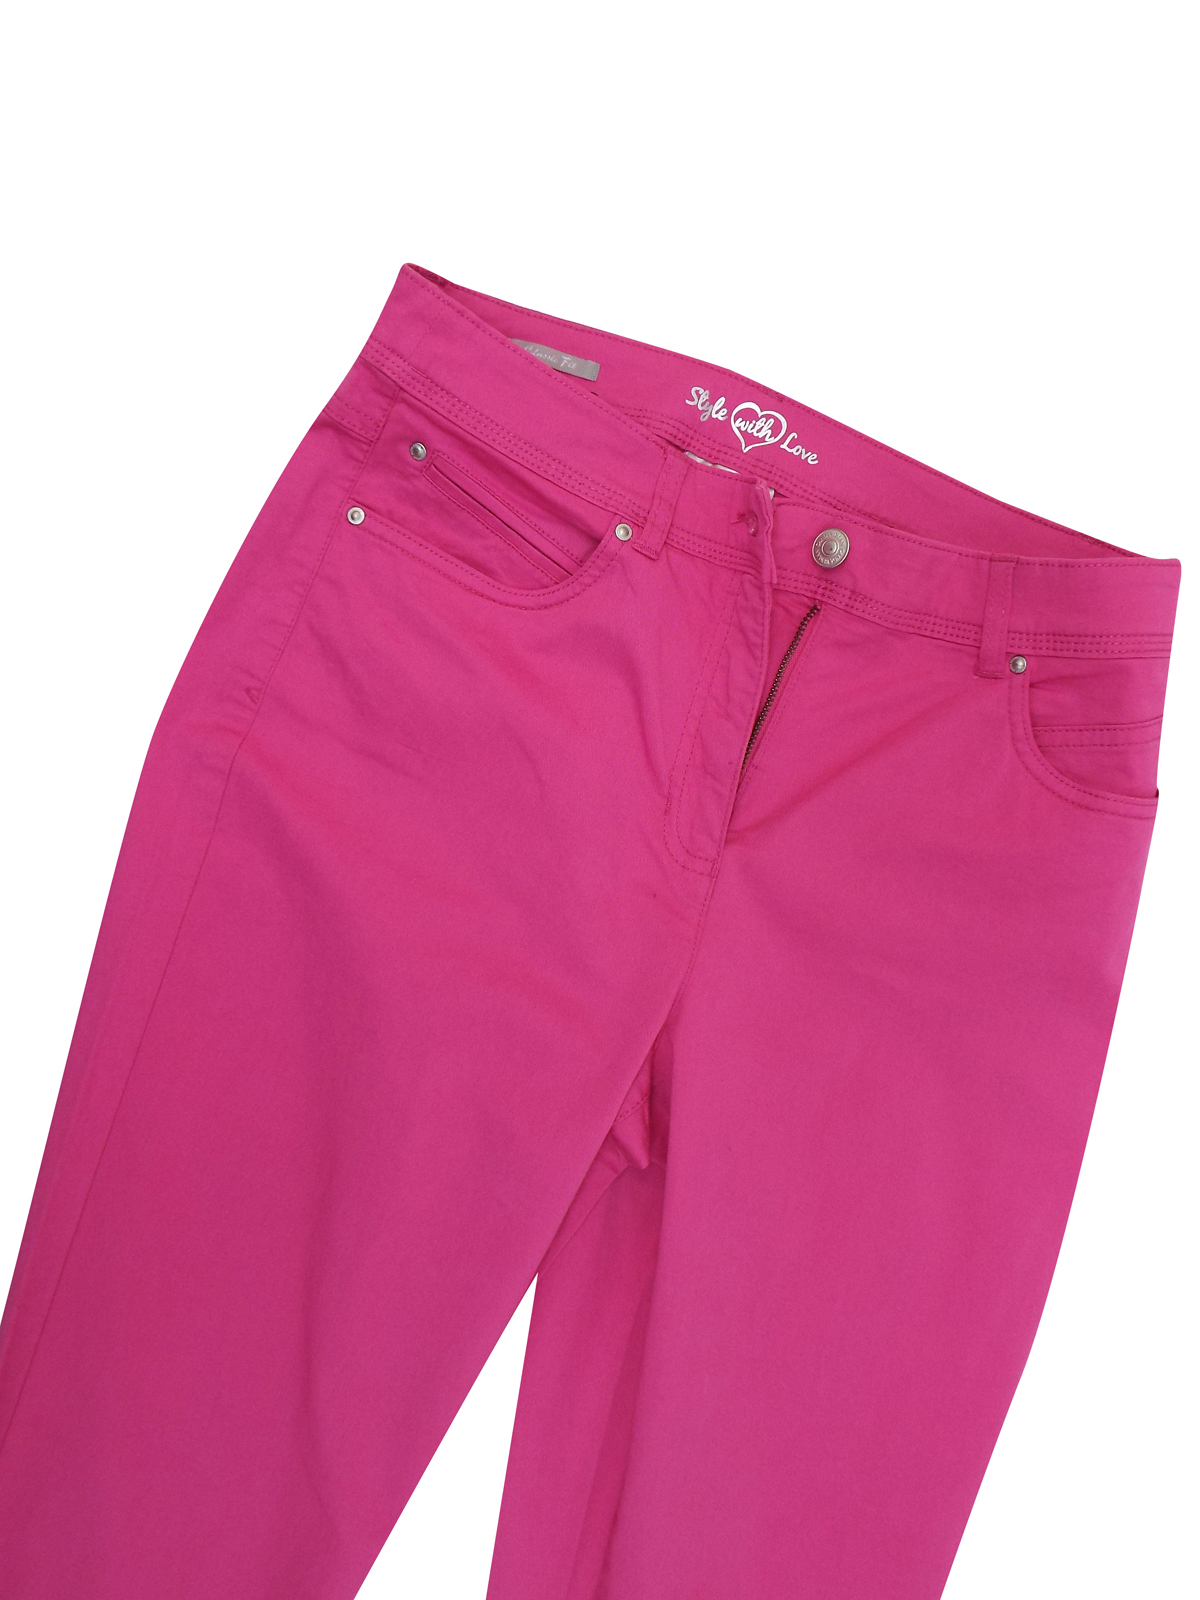 C&A - - C&A ROSE Classic Fit 5-Pcoket Denim Jeans - Size 8 to 22 (EU 36 ...